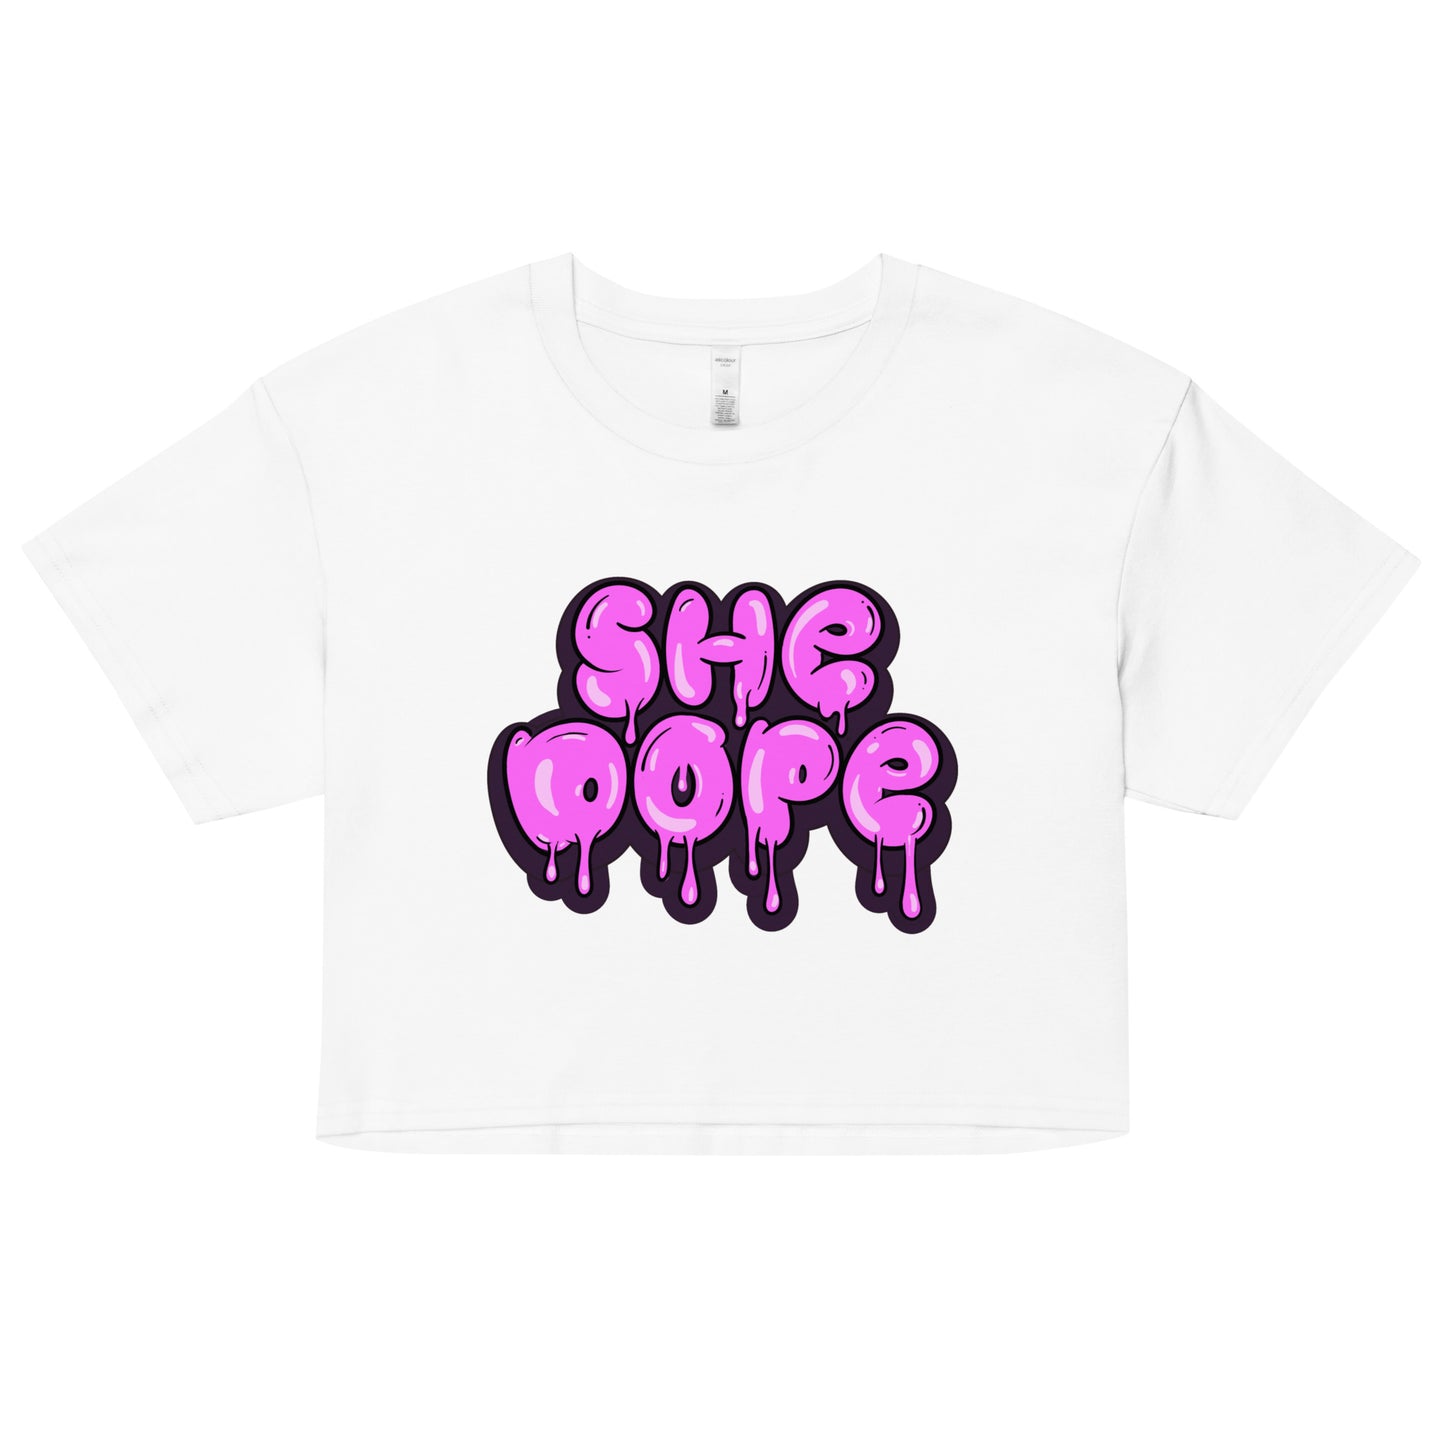 "She Dope" women’s crop top